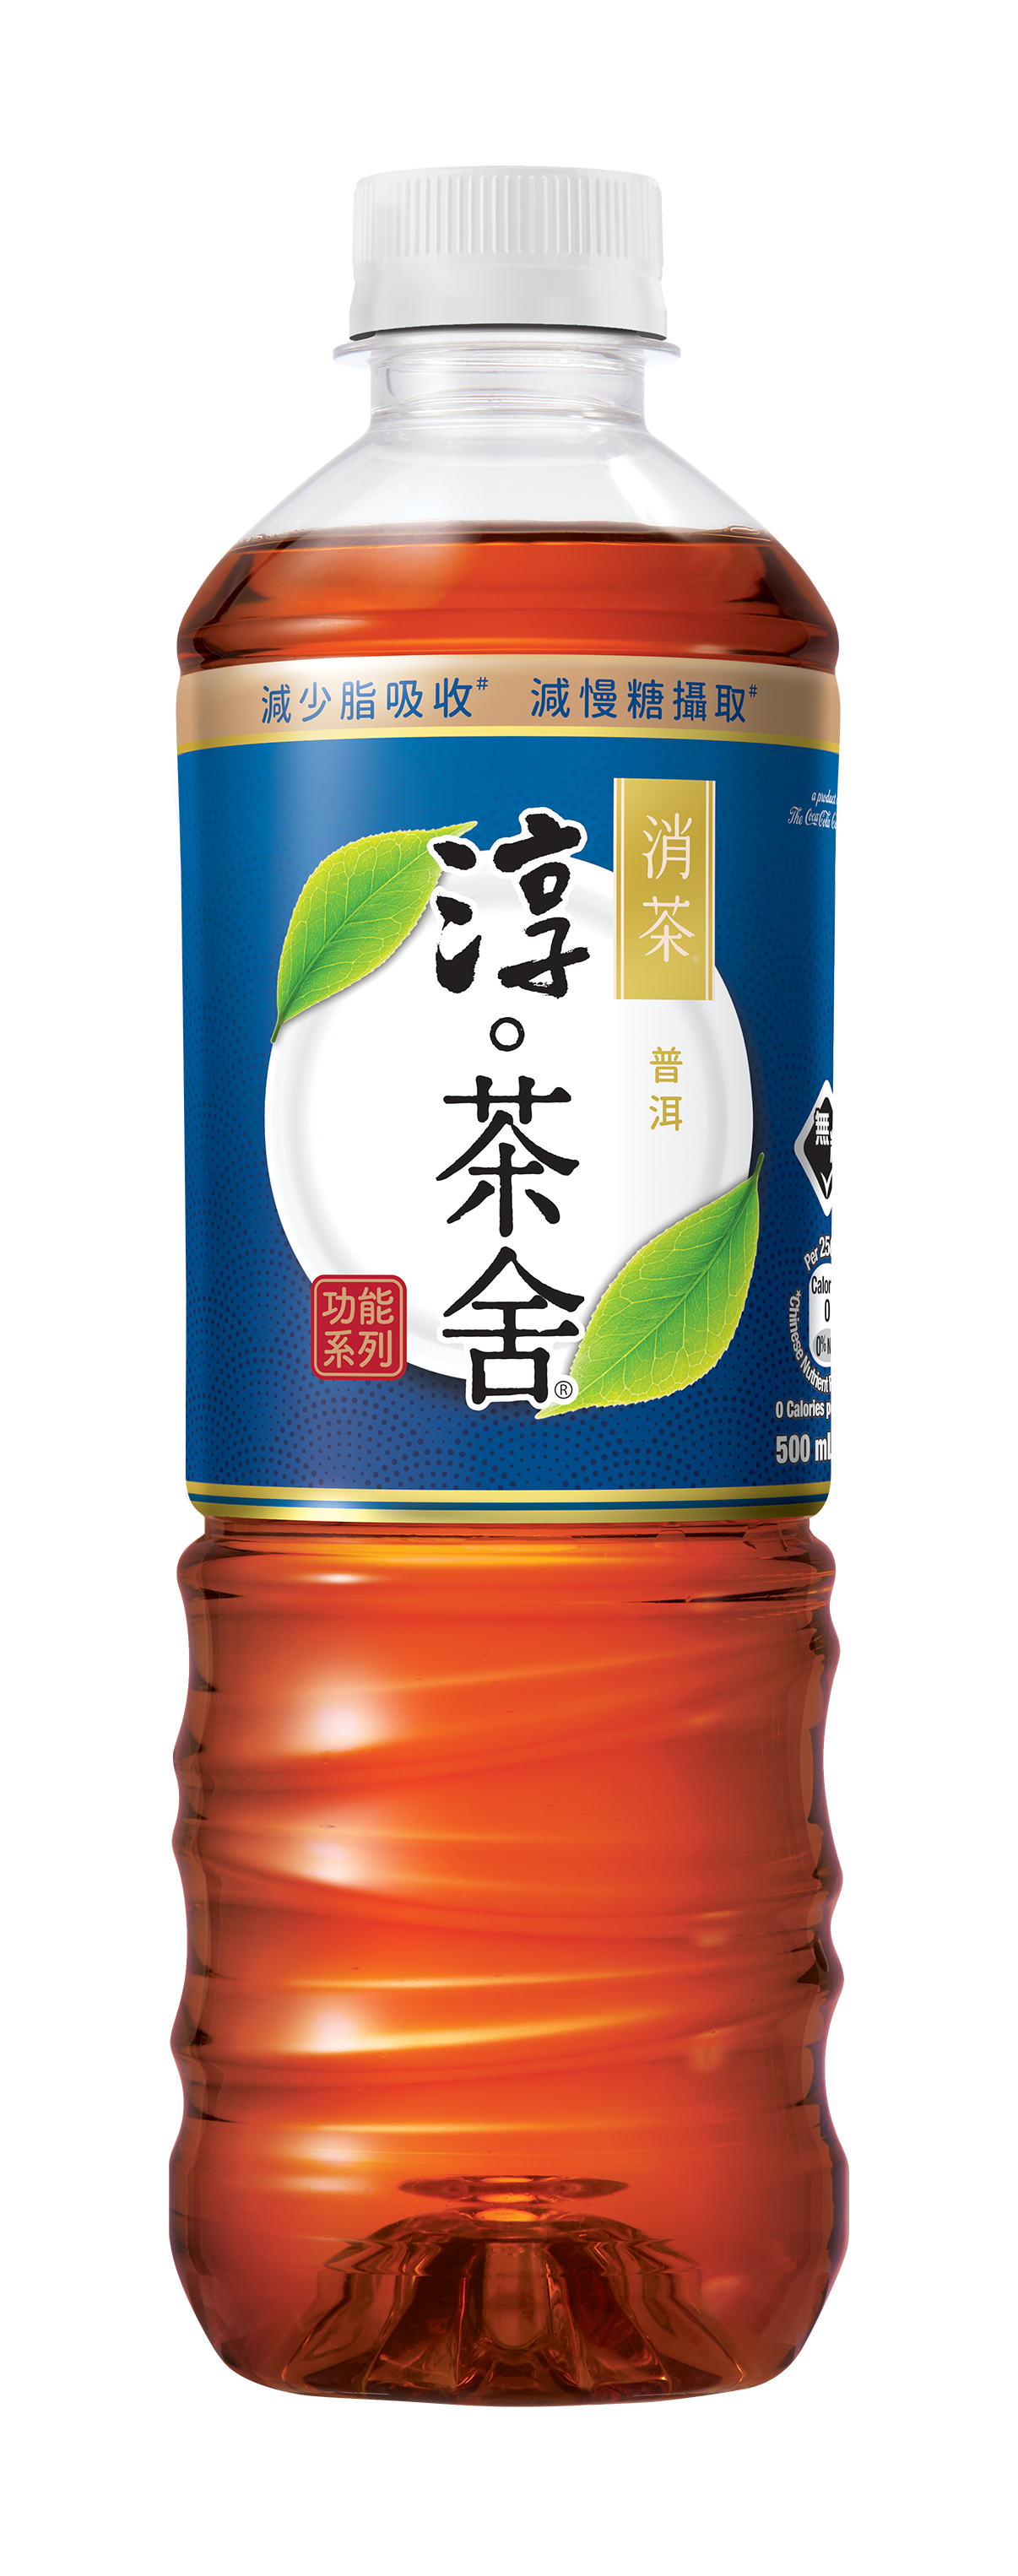 ATH Puer Tea Beverage (with Fiber)(No Sugar) bottle